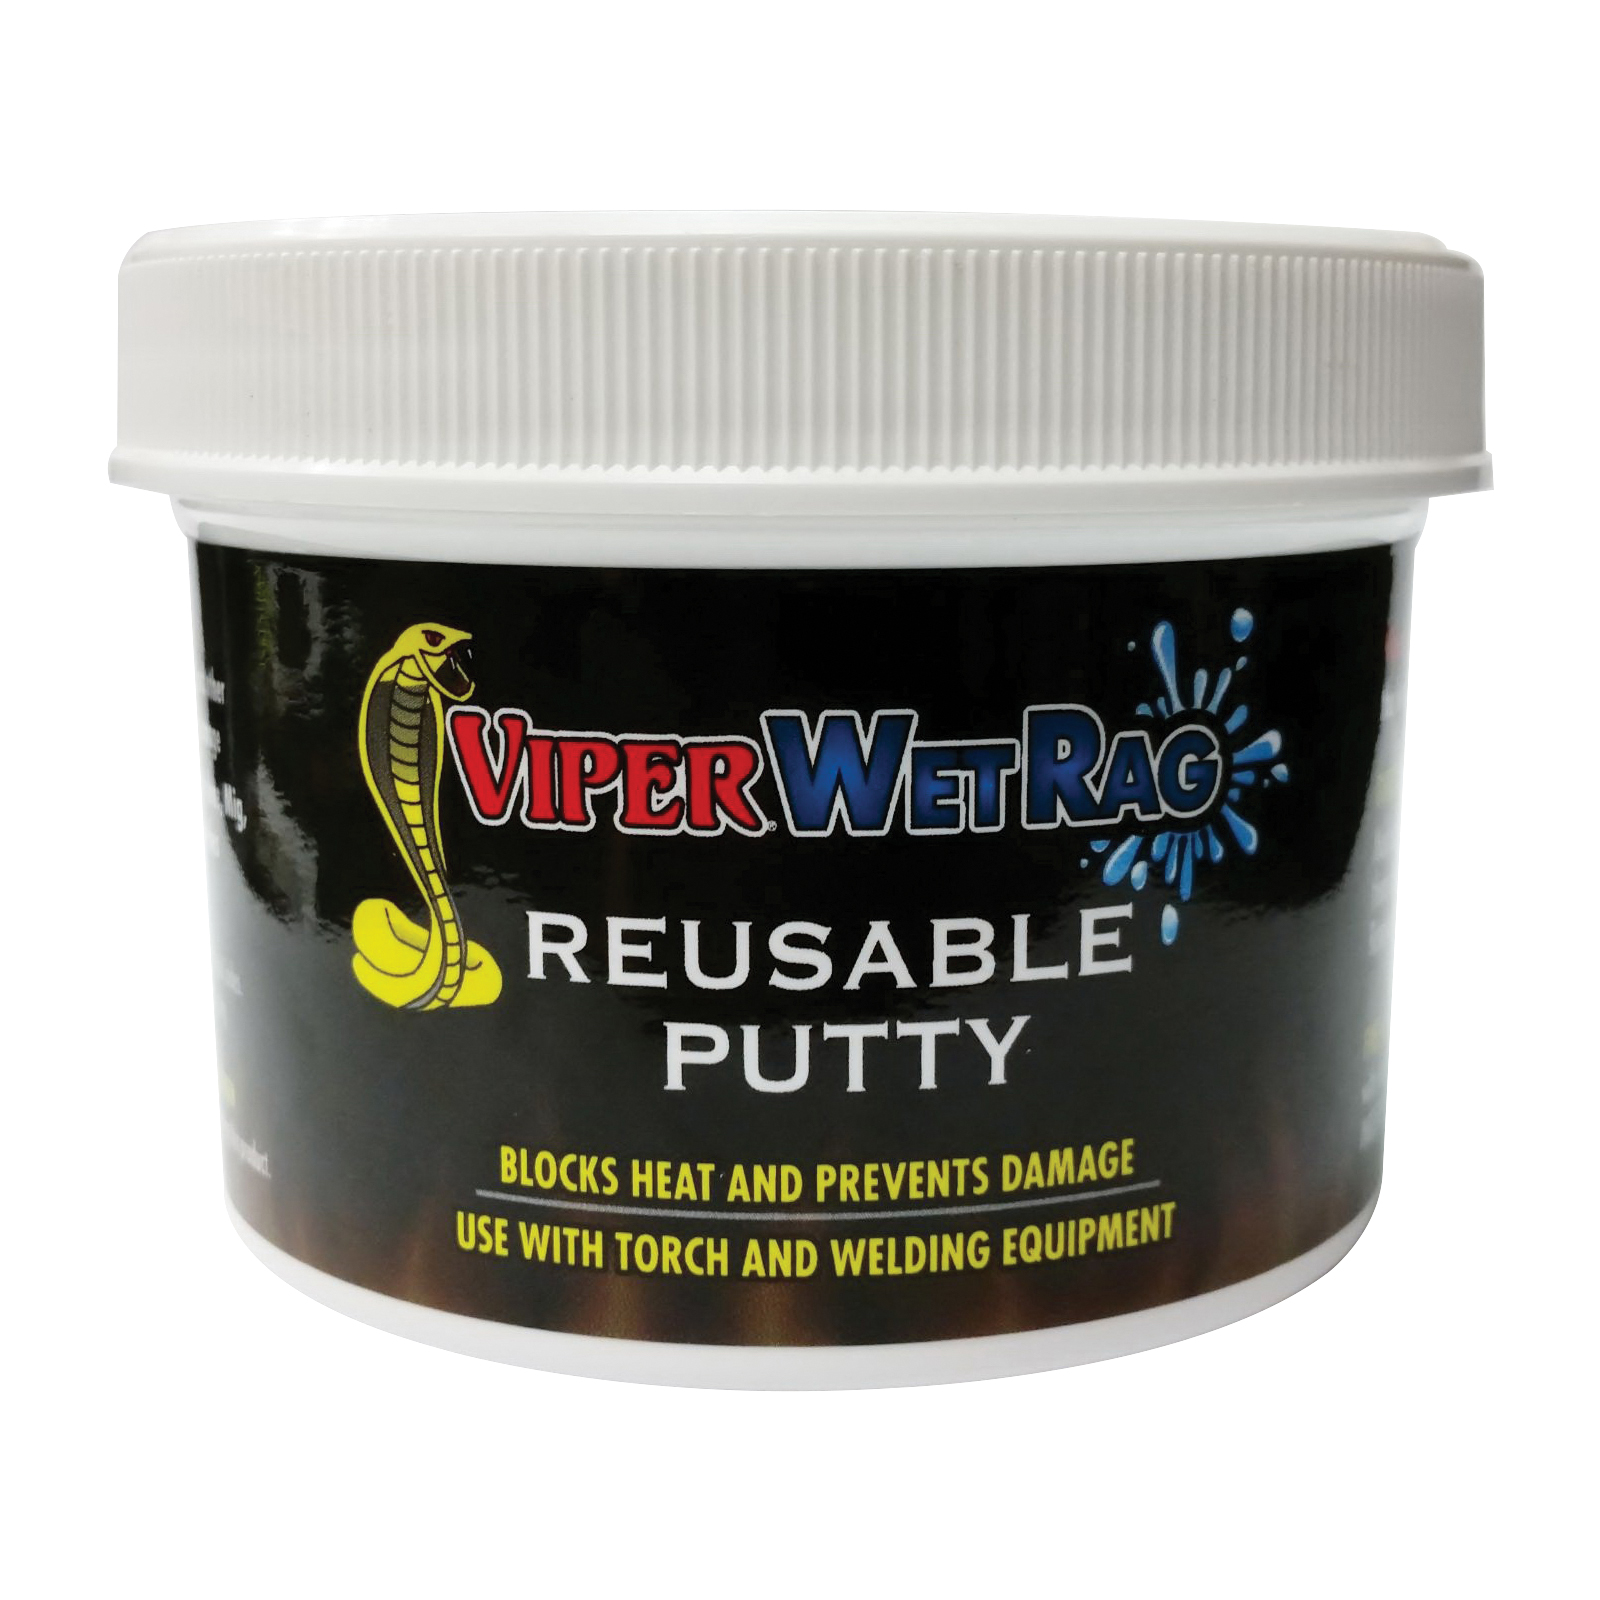 Refrigeration Technologies® Viper RT400P Wet Rag Heat Blocking Putty, 8 oz, Paste Form, Gray and Green